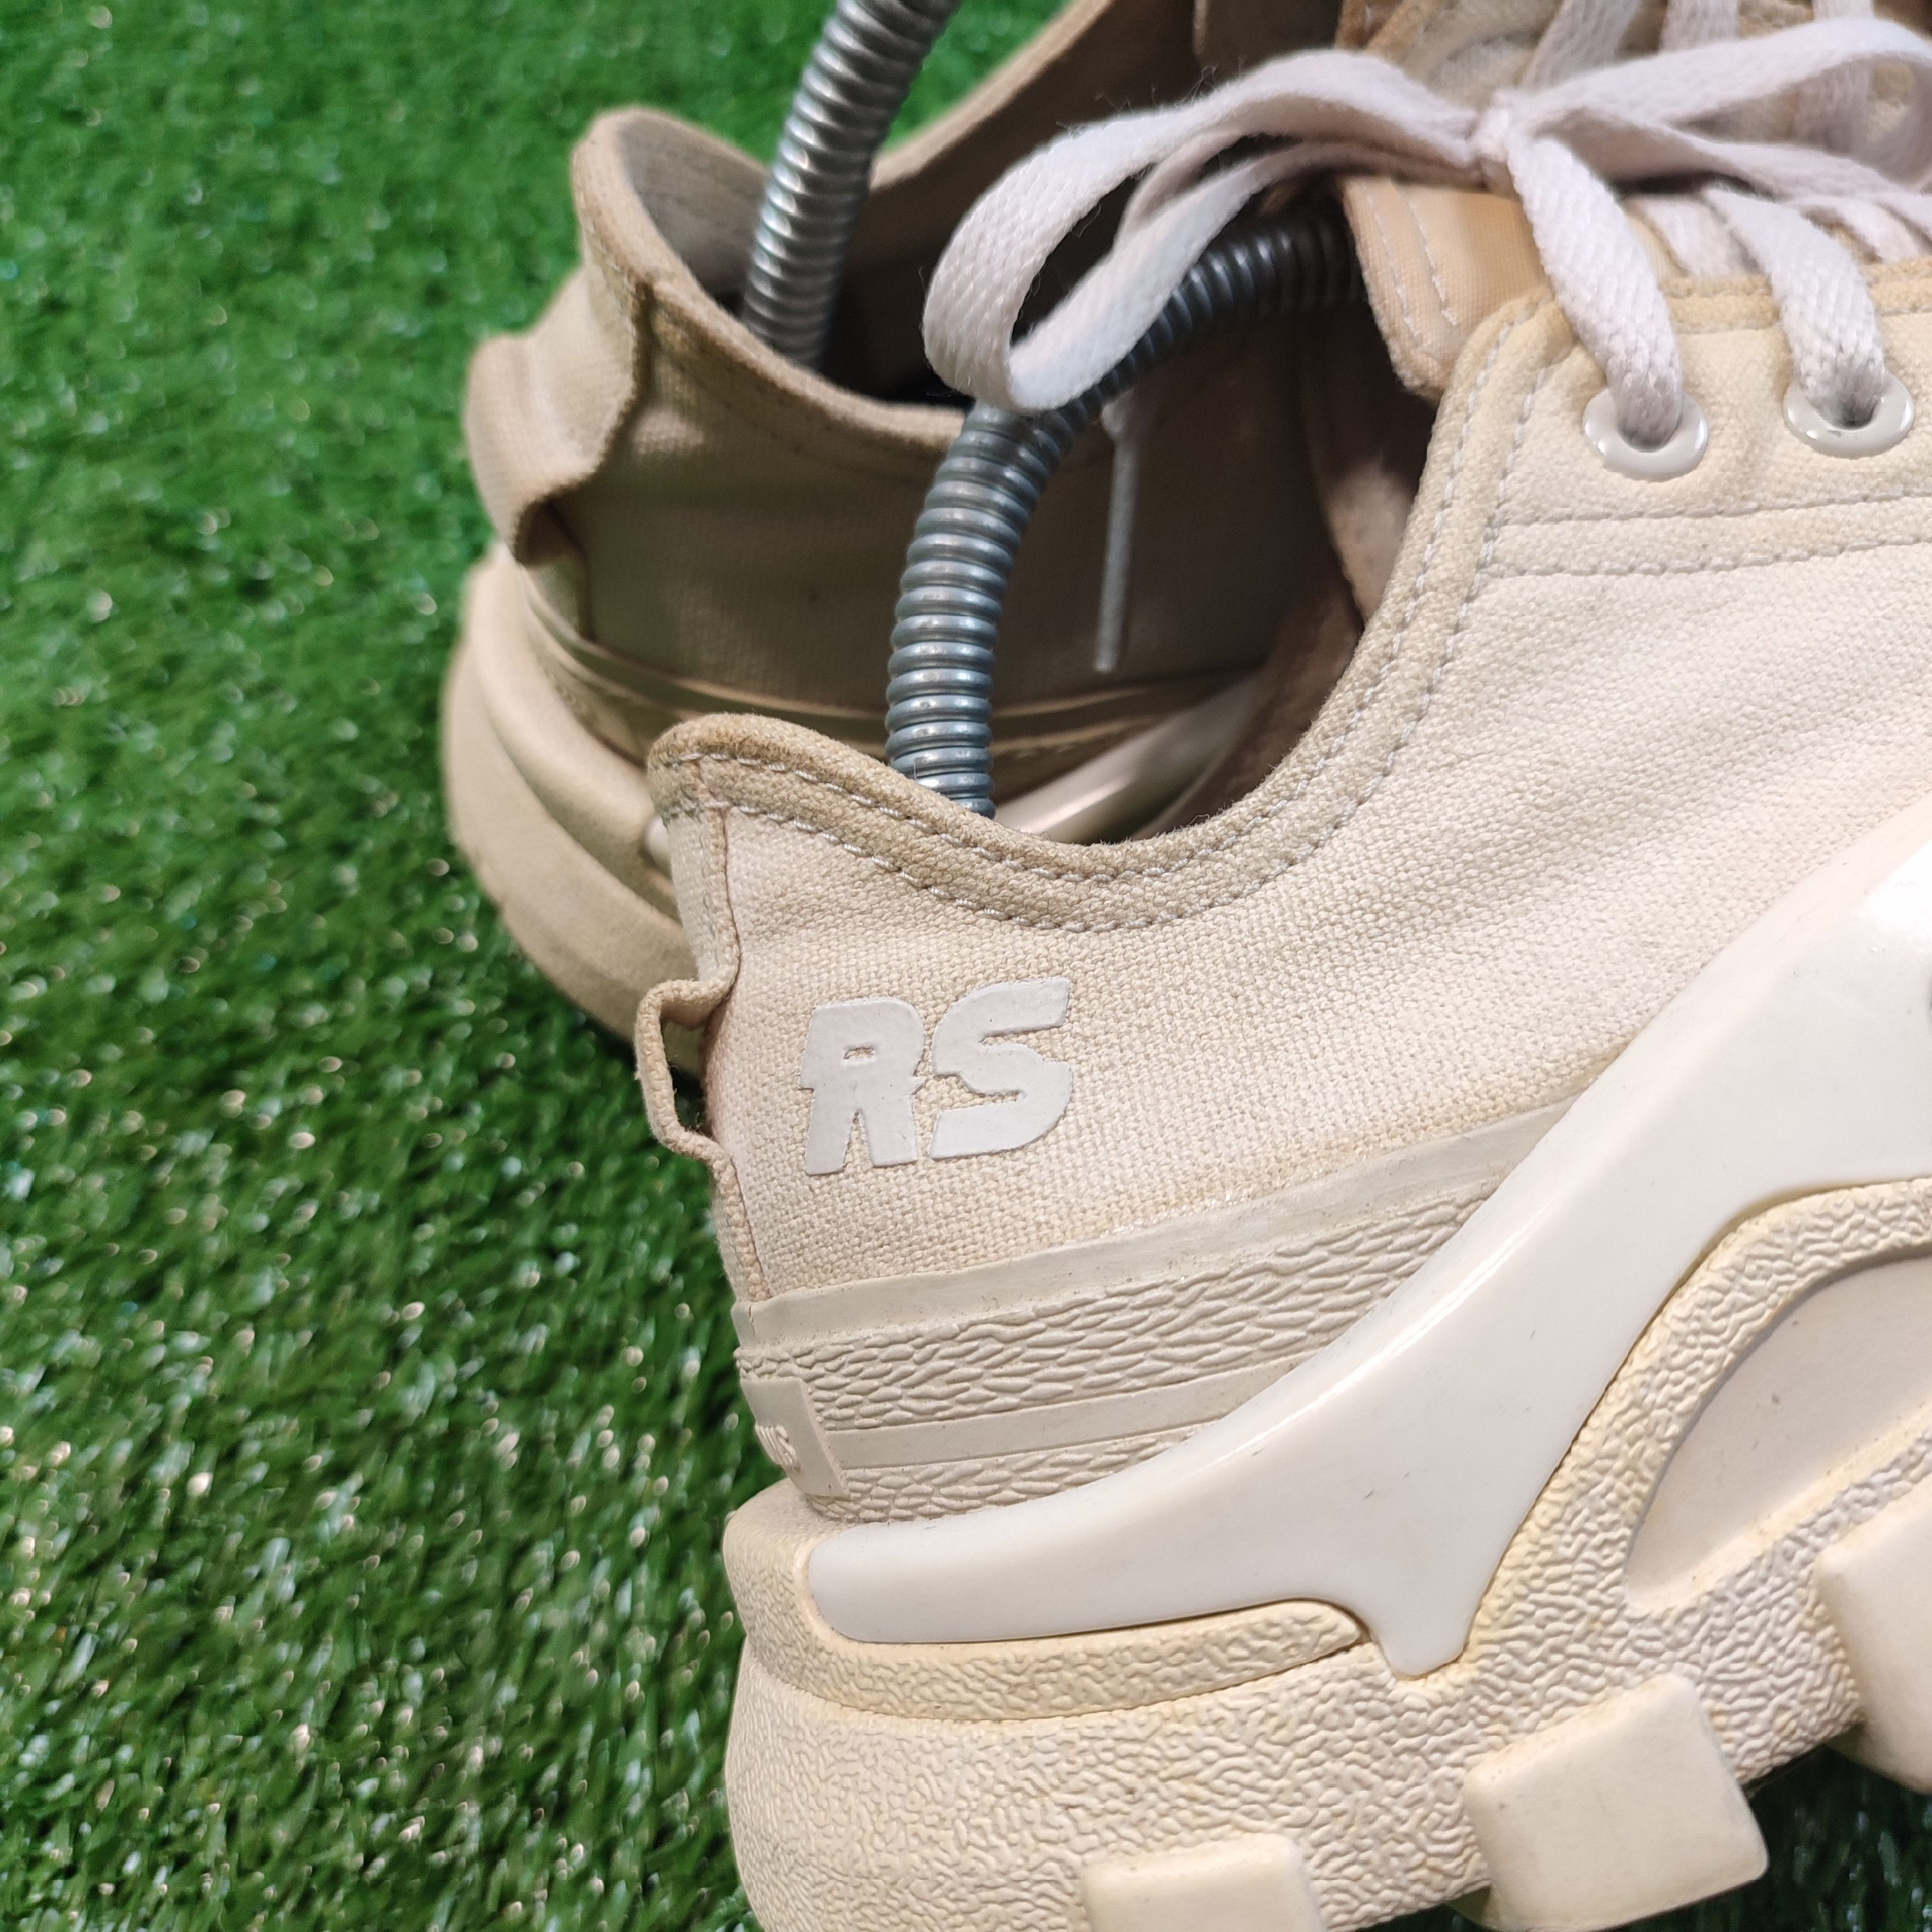 Adidas - Rafs Simons - Detroit Runner Sneakers - 11